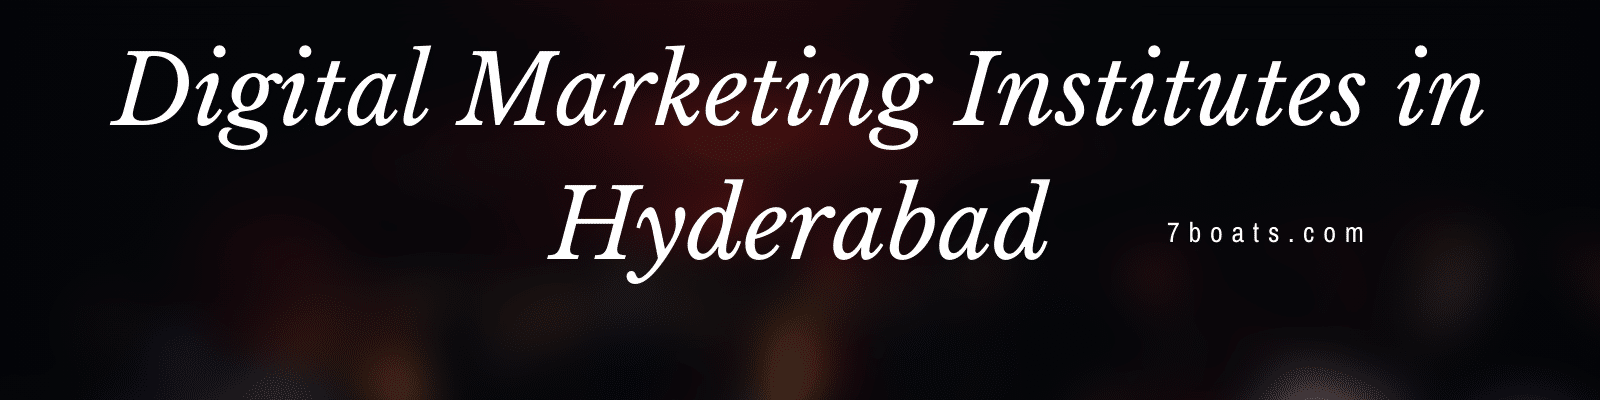 digital marketing institutes in hyderabad